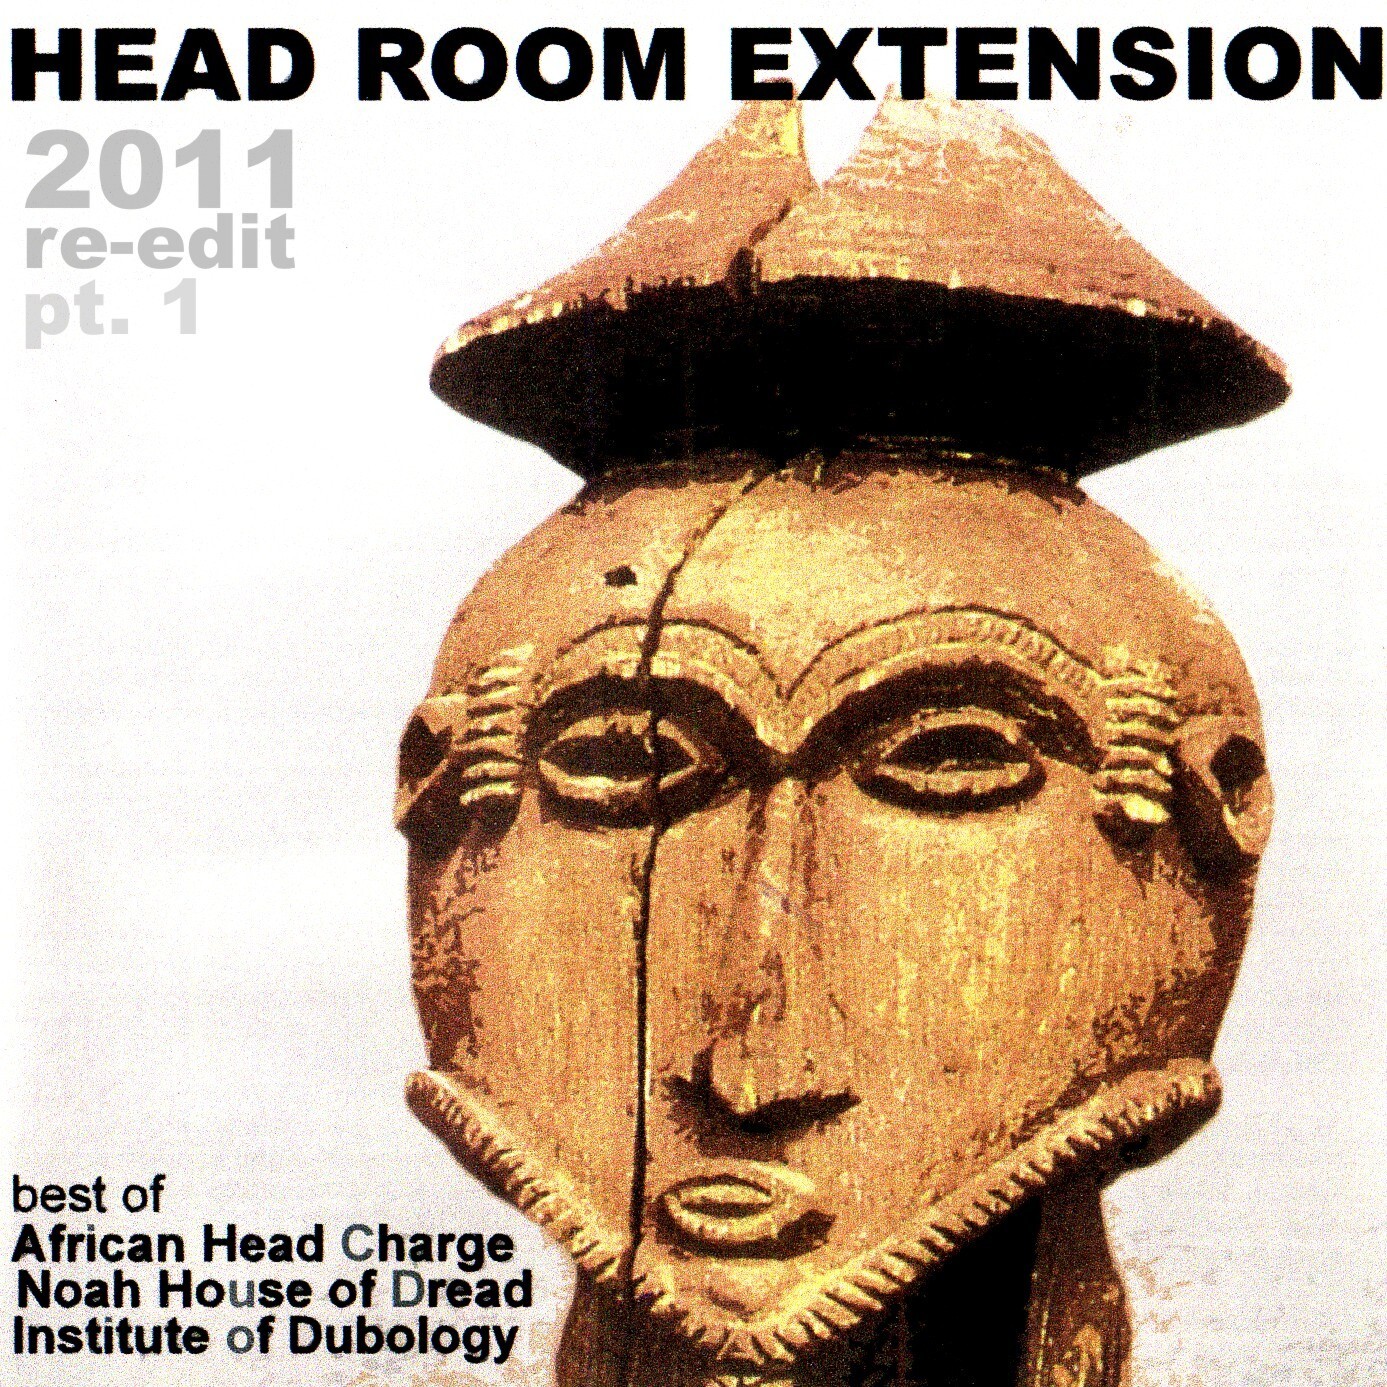 45_Head_Room_Extension_01_Cover_gross.jpg